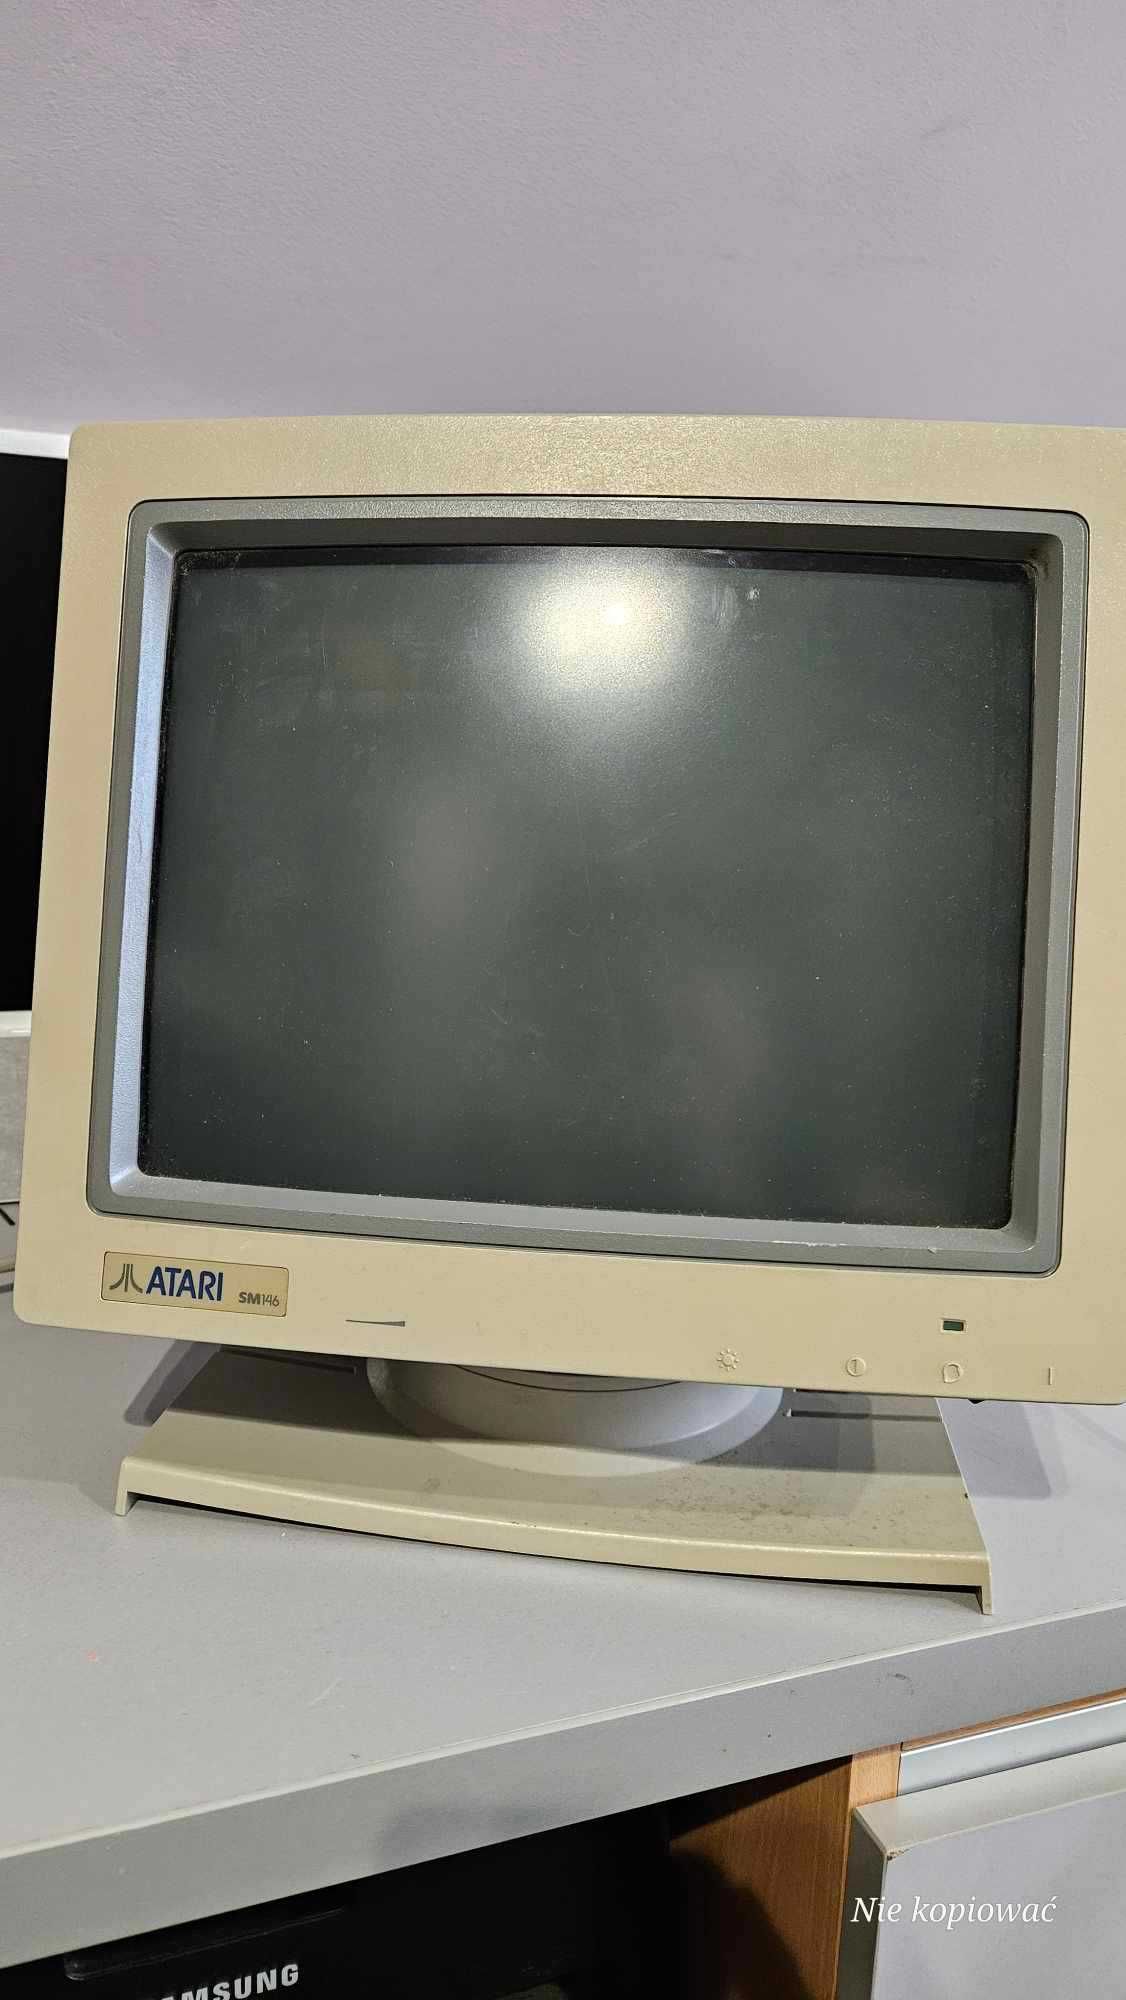 Monitor Atari SM 146 monochromatyczny